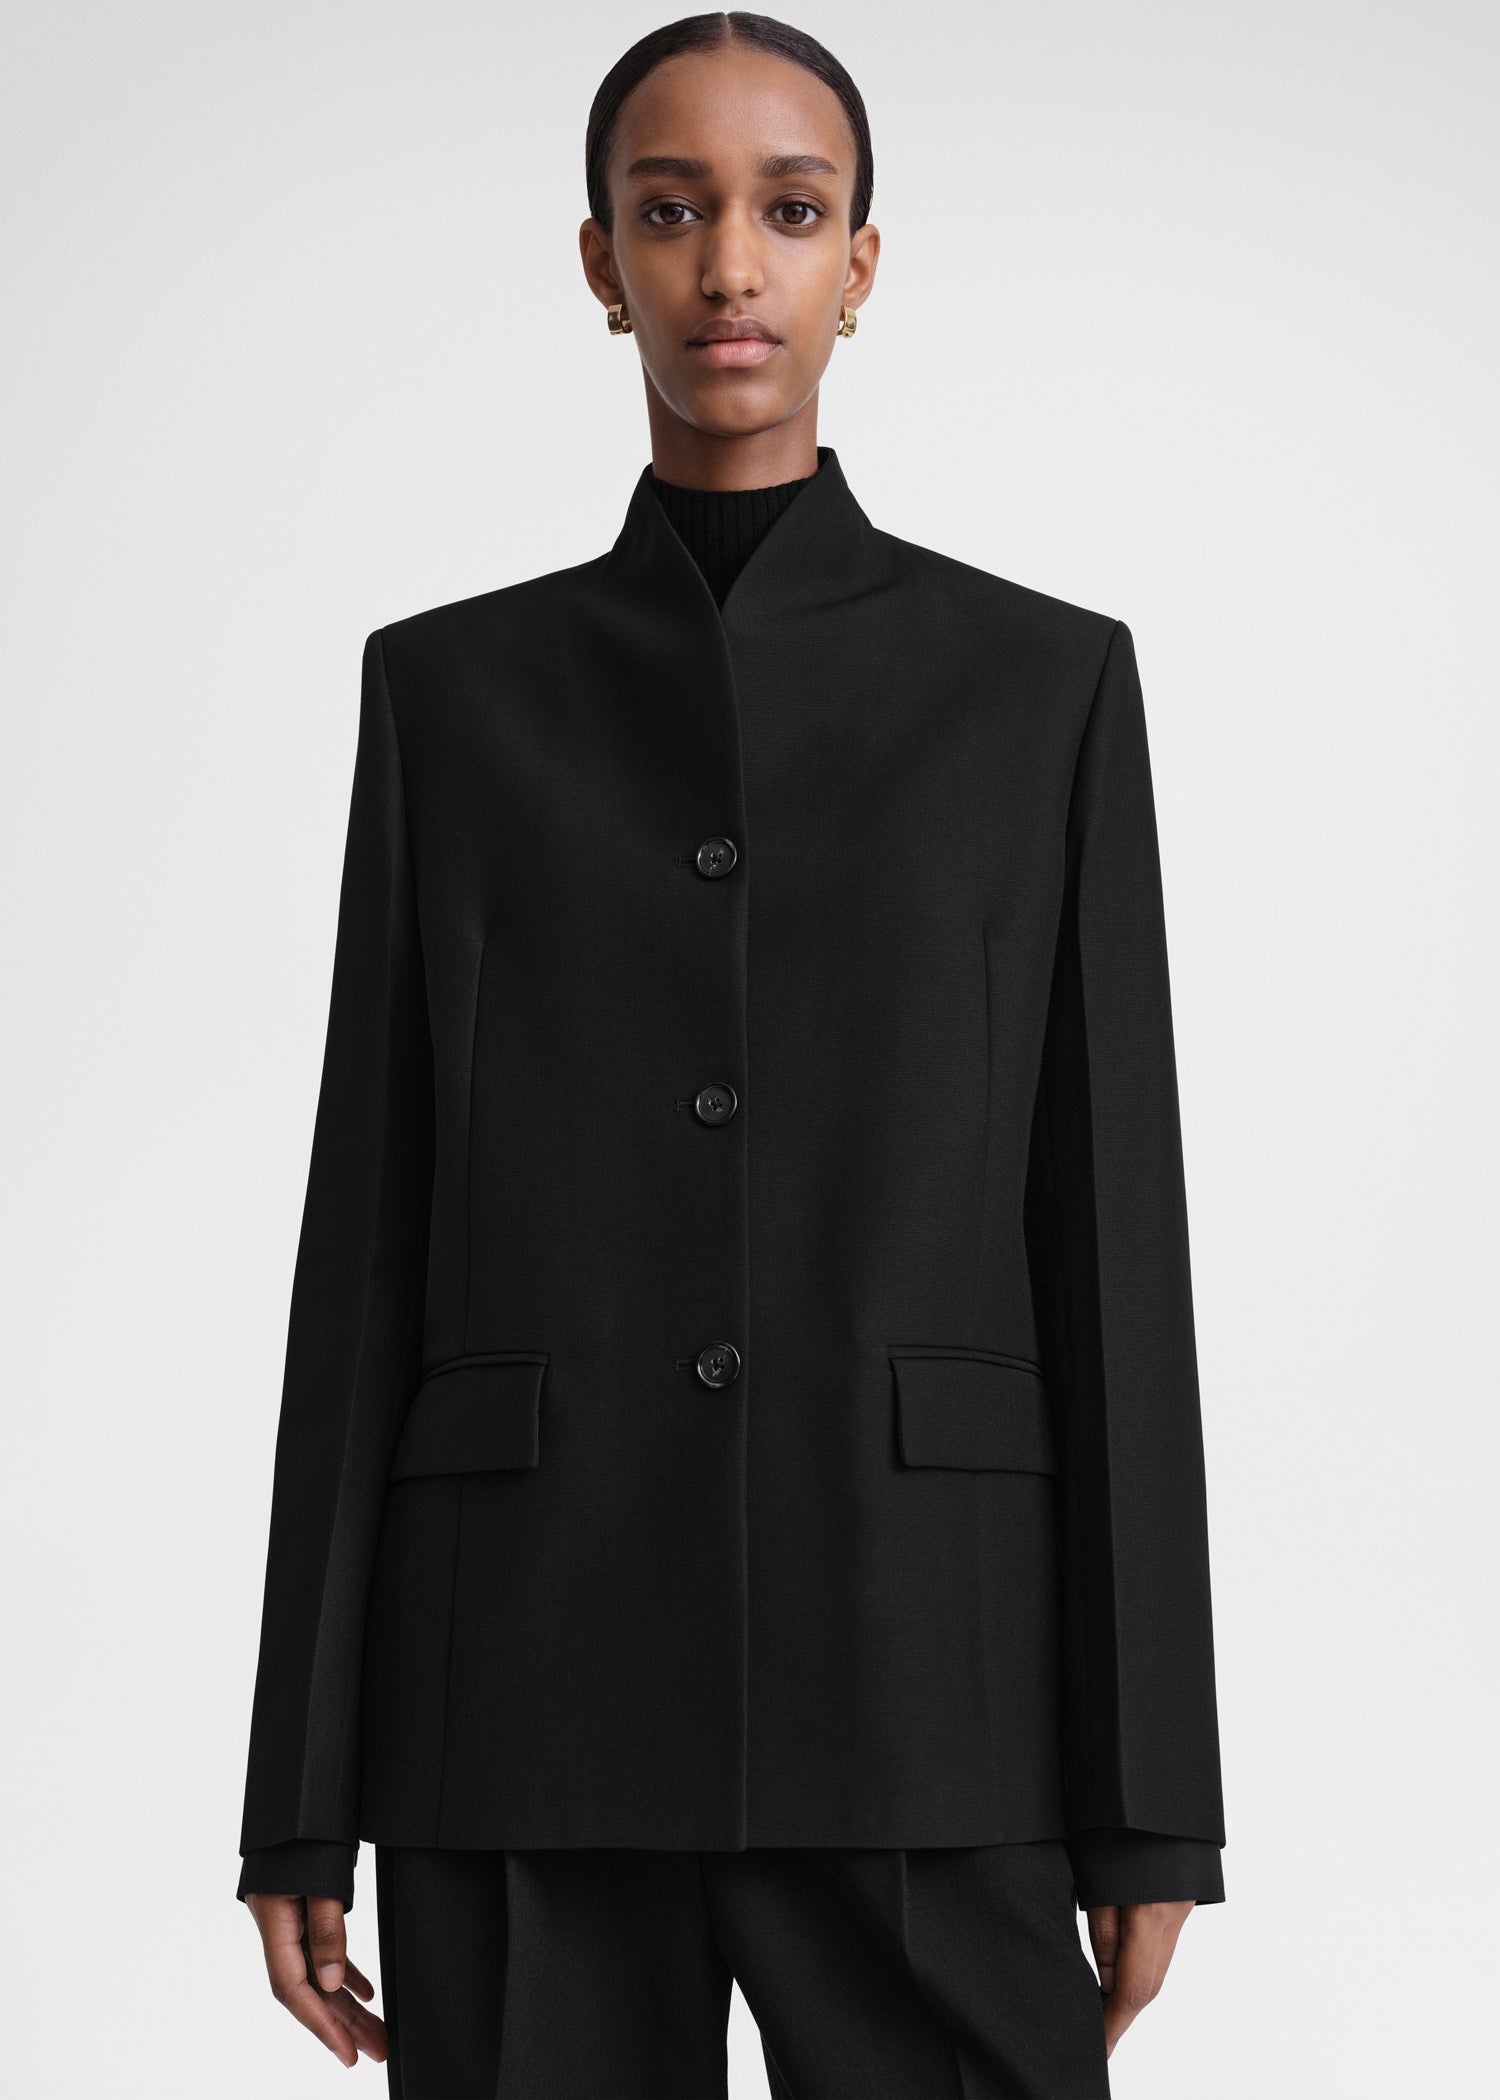 Overlay suit jacket black - 5